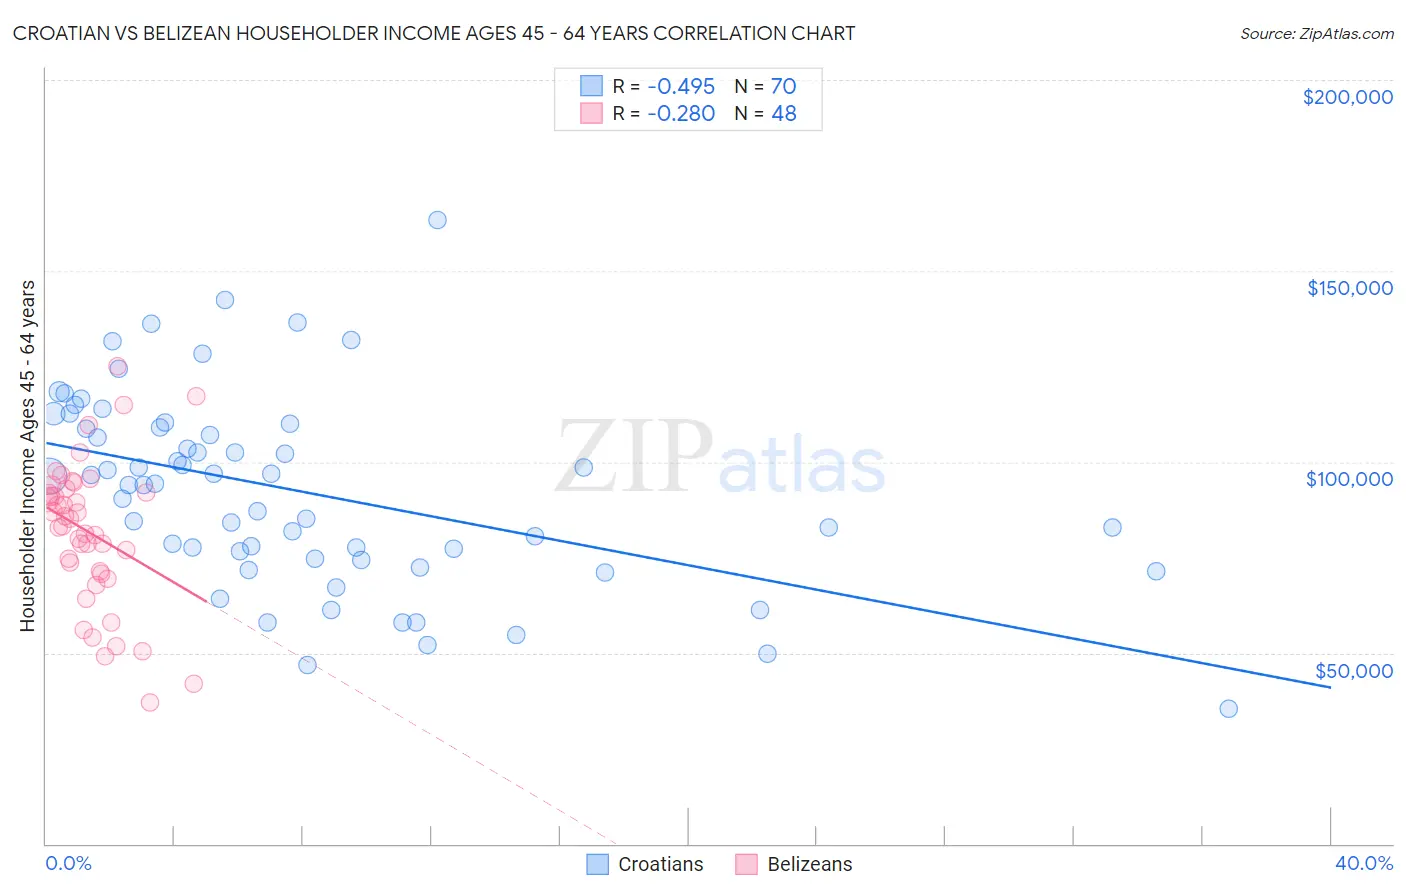 Croatian vs Belizean Householder Income Ages 45 - 64 years